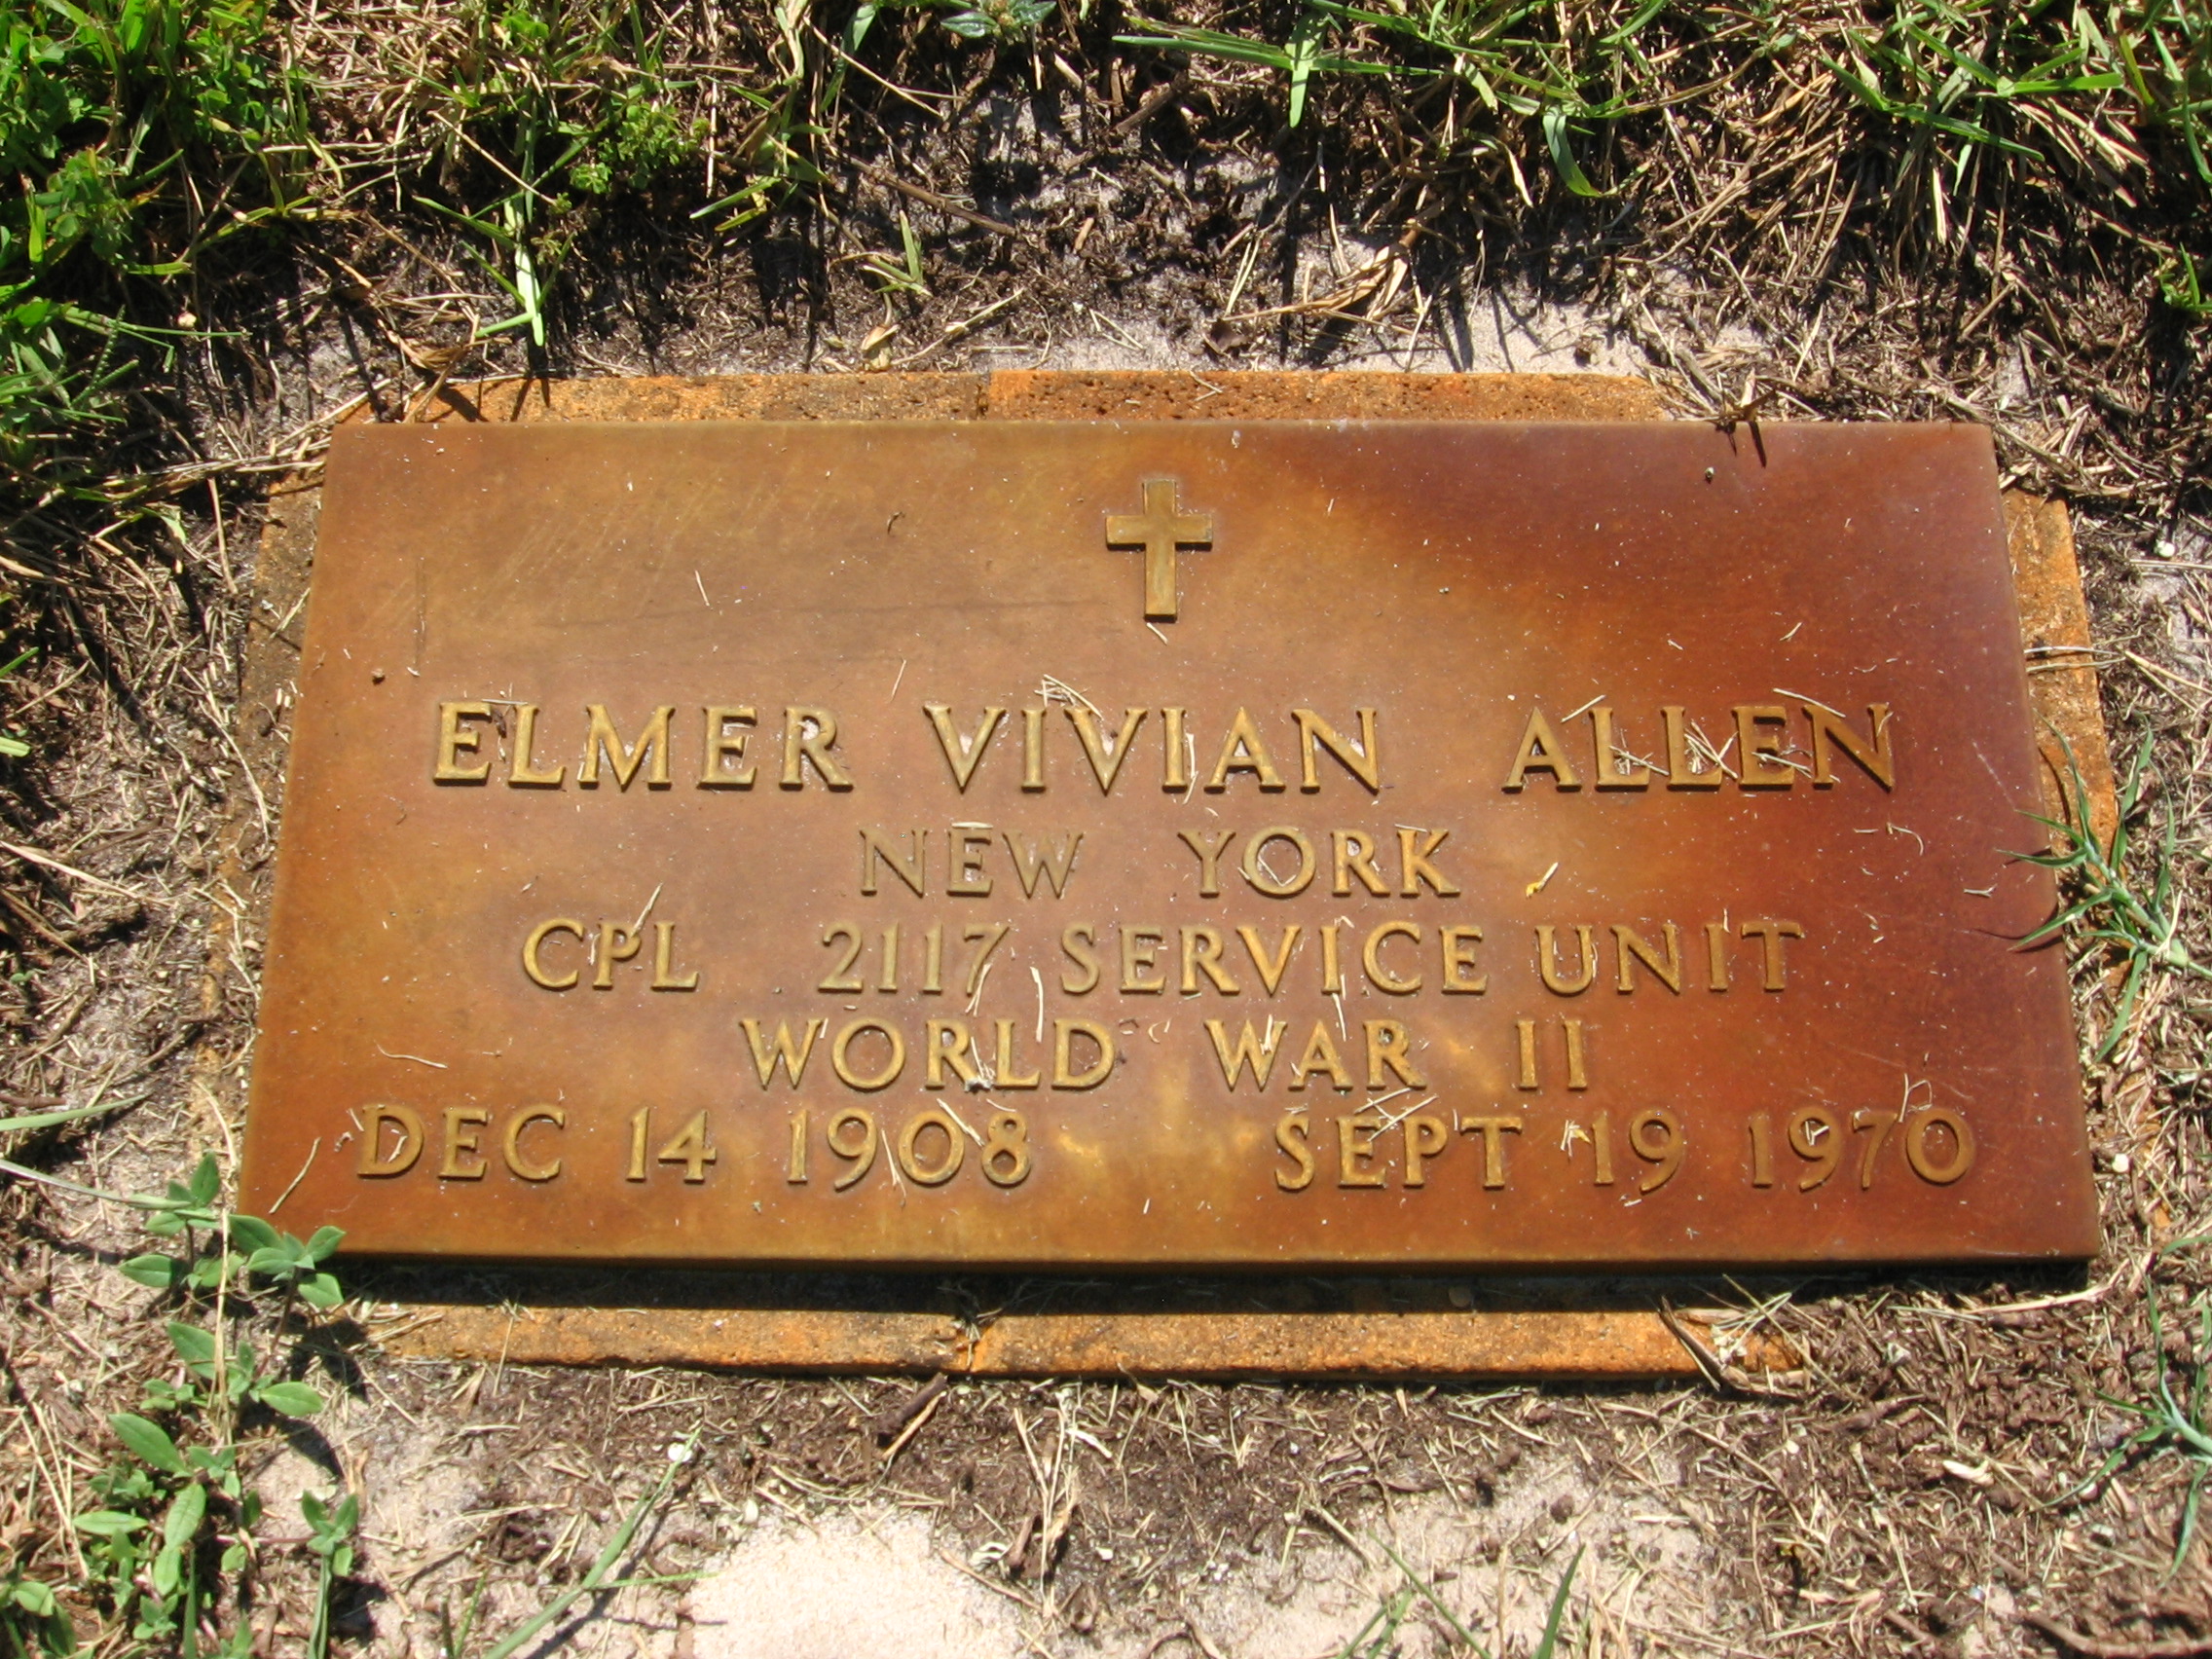 Corp Elmer Vivian Allen